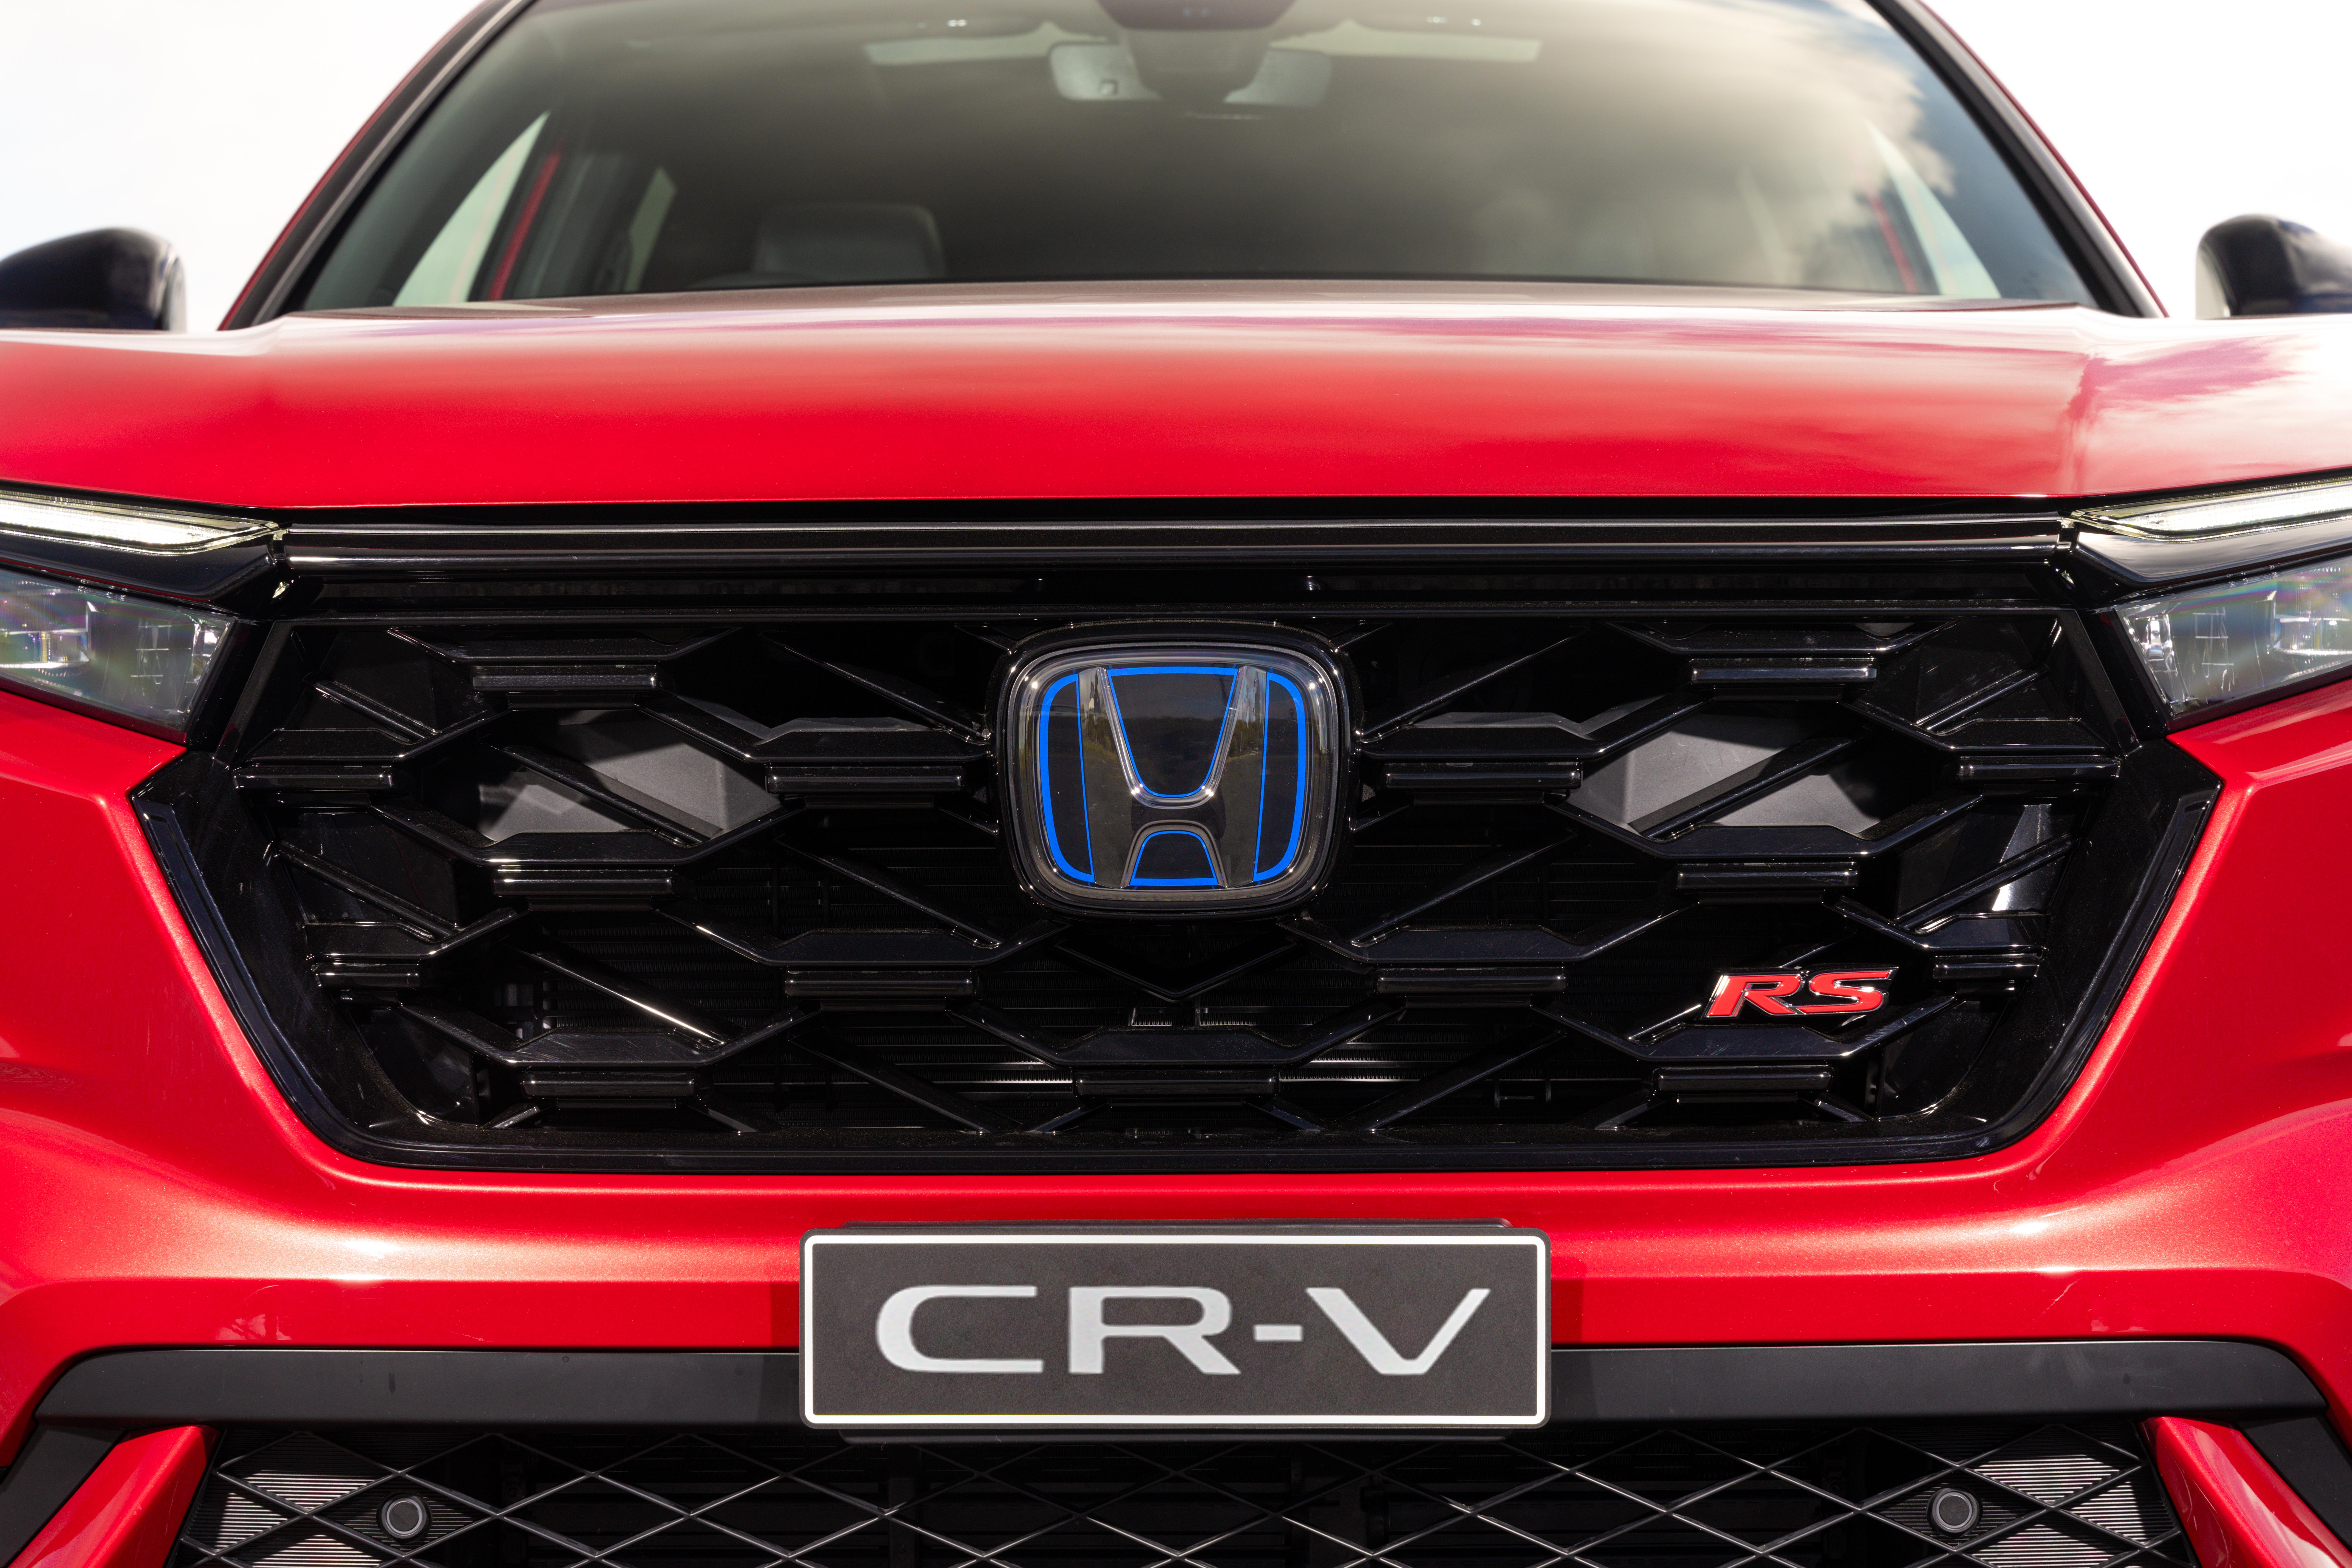 Honda Global  July 14 , 2022 Honda Launches All-New ZR-V SUV